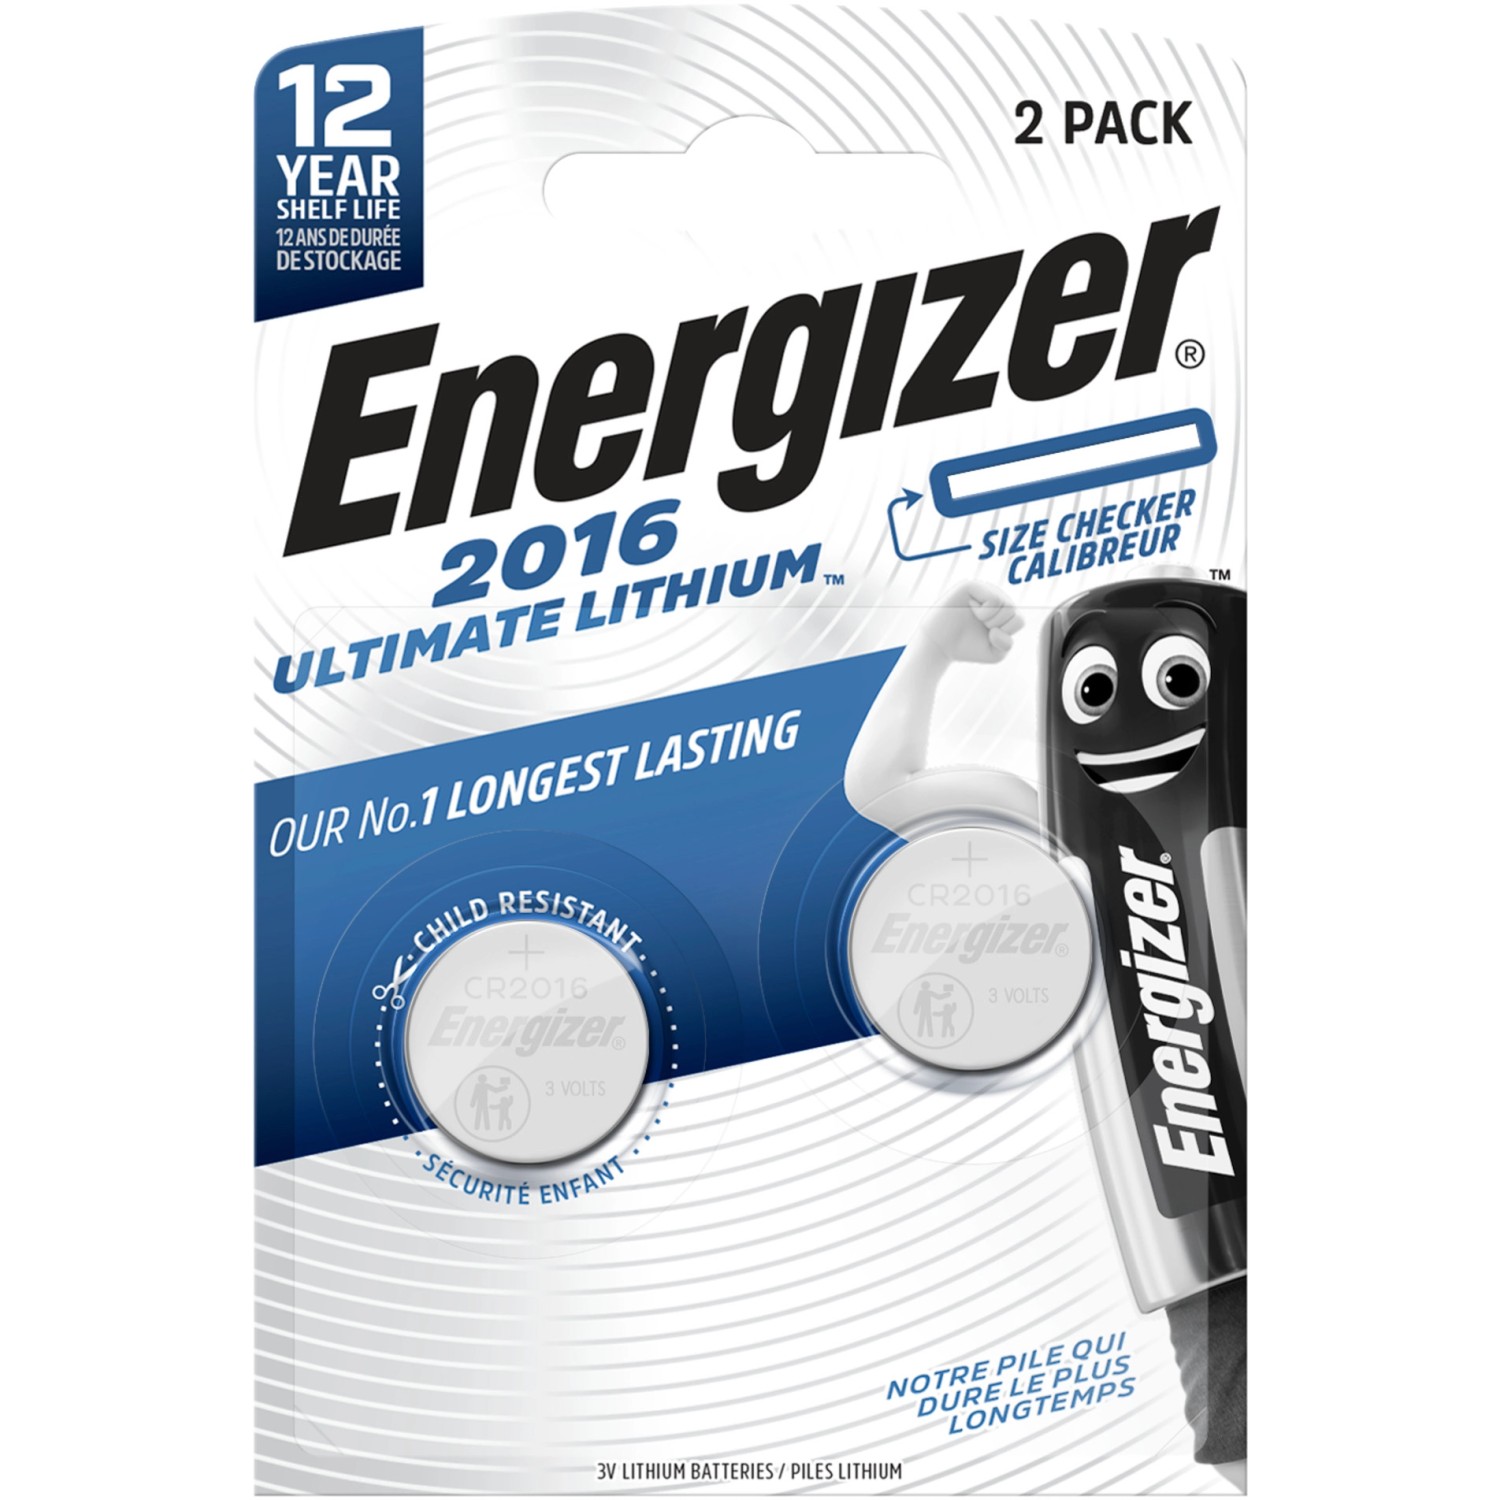 Energizer Knopfzelle Ultimate Lithium CR 2016 2 Stück